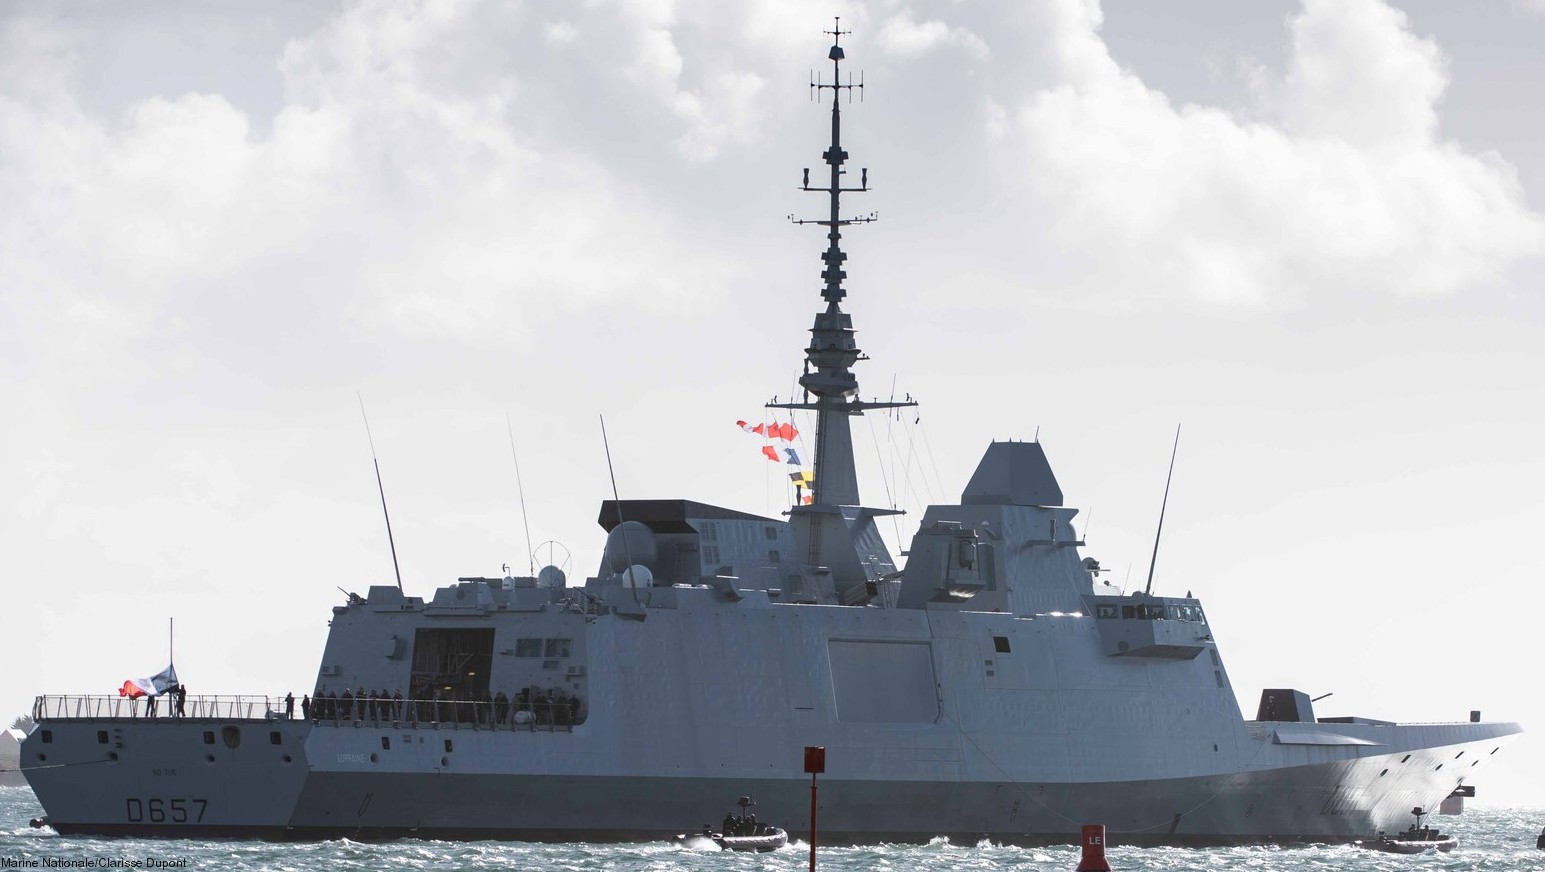 d-657 fs lorraine fremm aquitaine class frigate fregate multi purpose french navy marine nationale 12